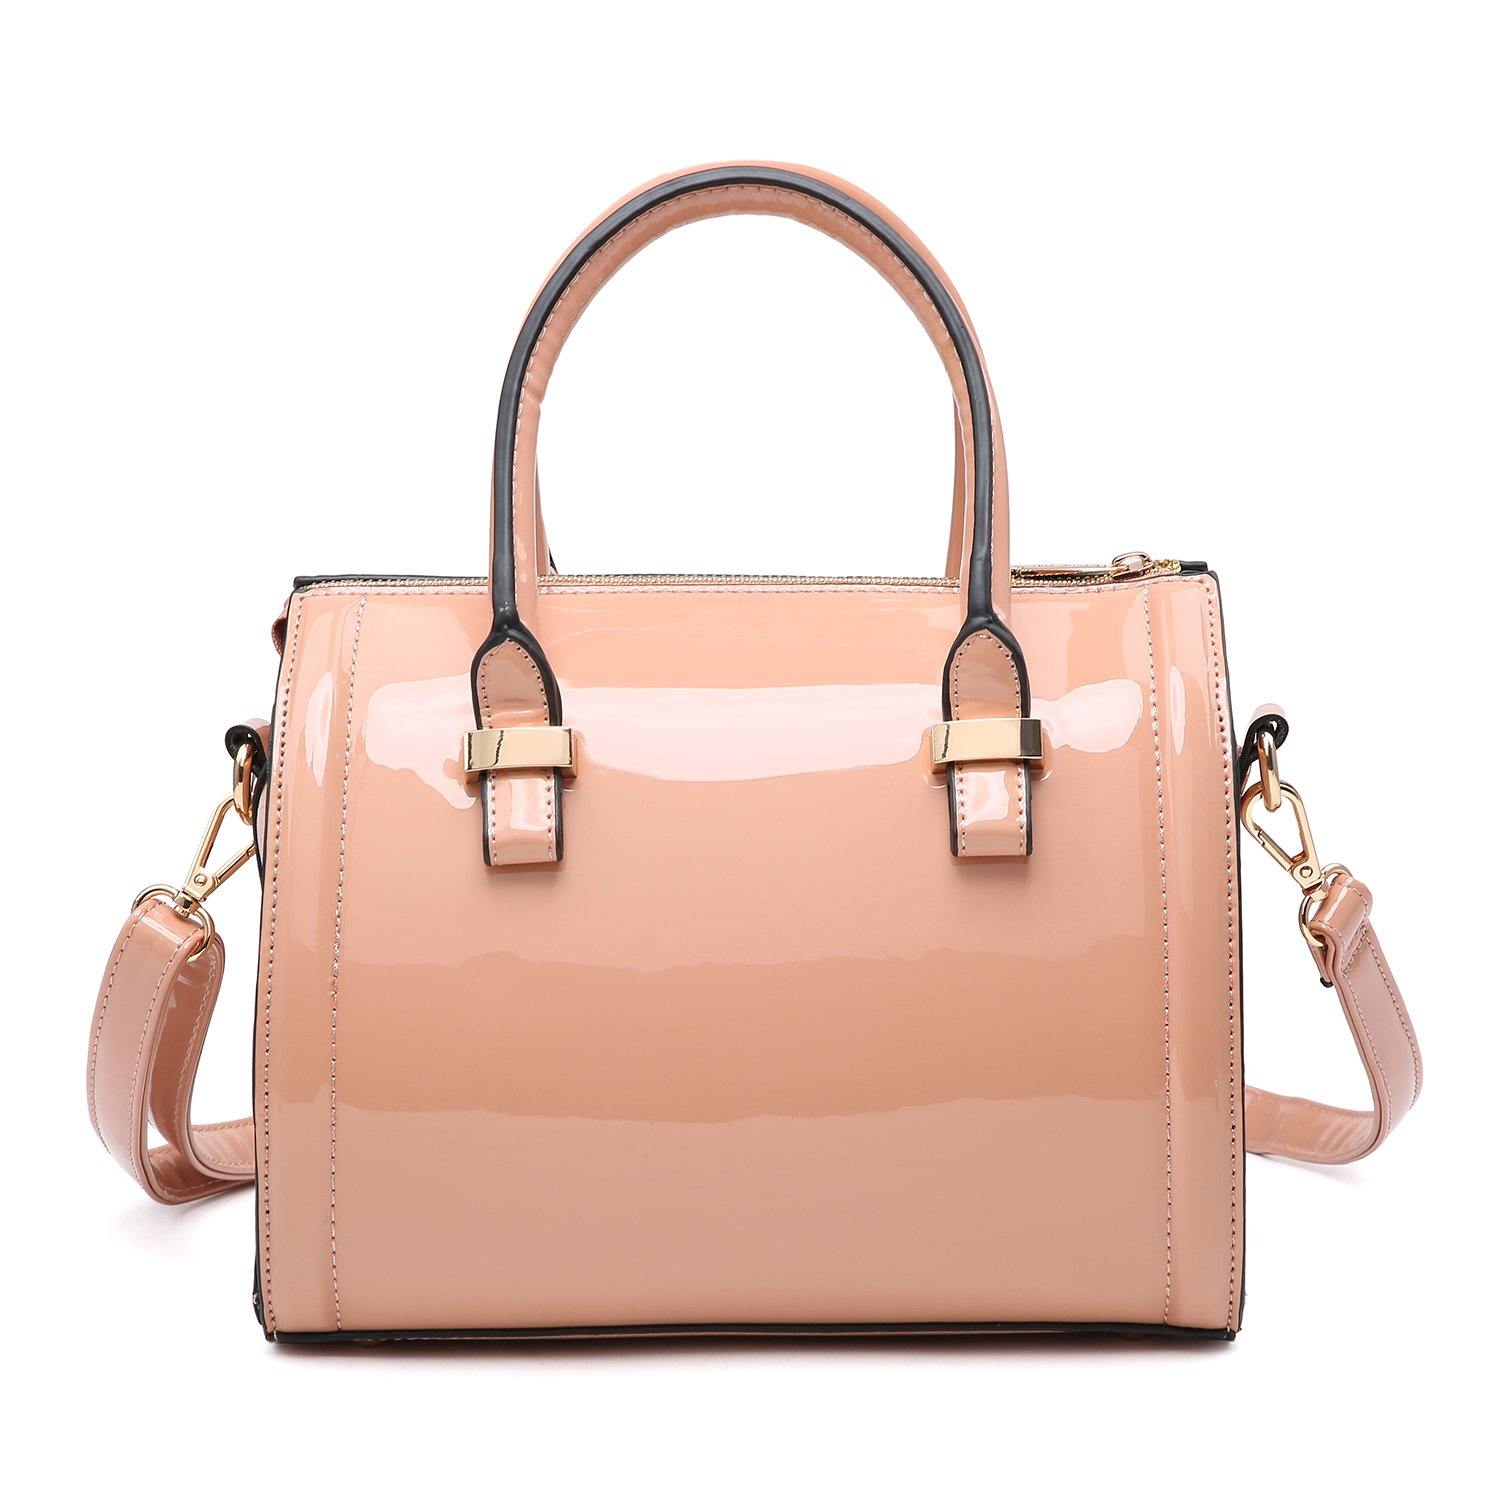  Fashion Women's Top Handle Satchel Handbags Leather